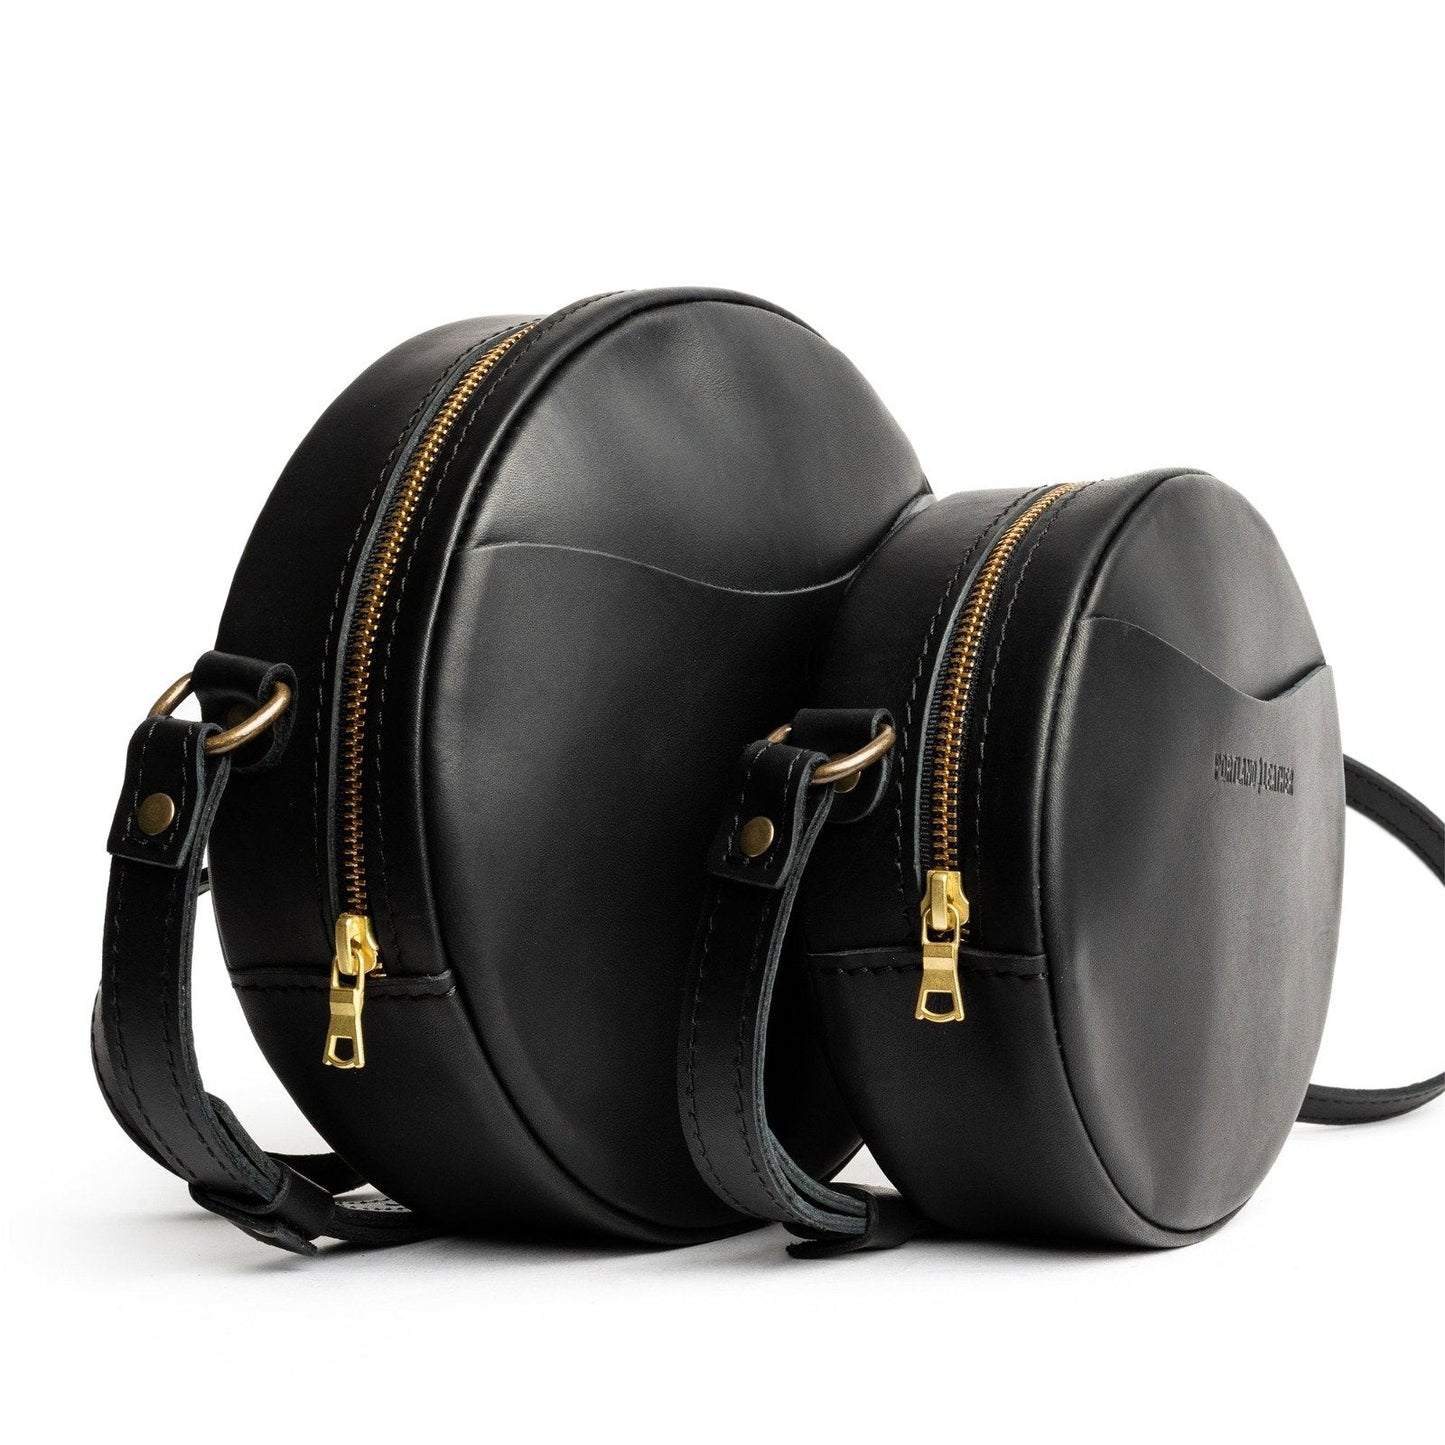 All Color: Black | leather handmade circle purse